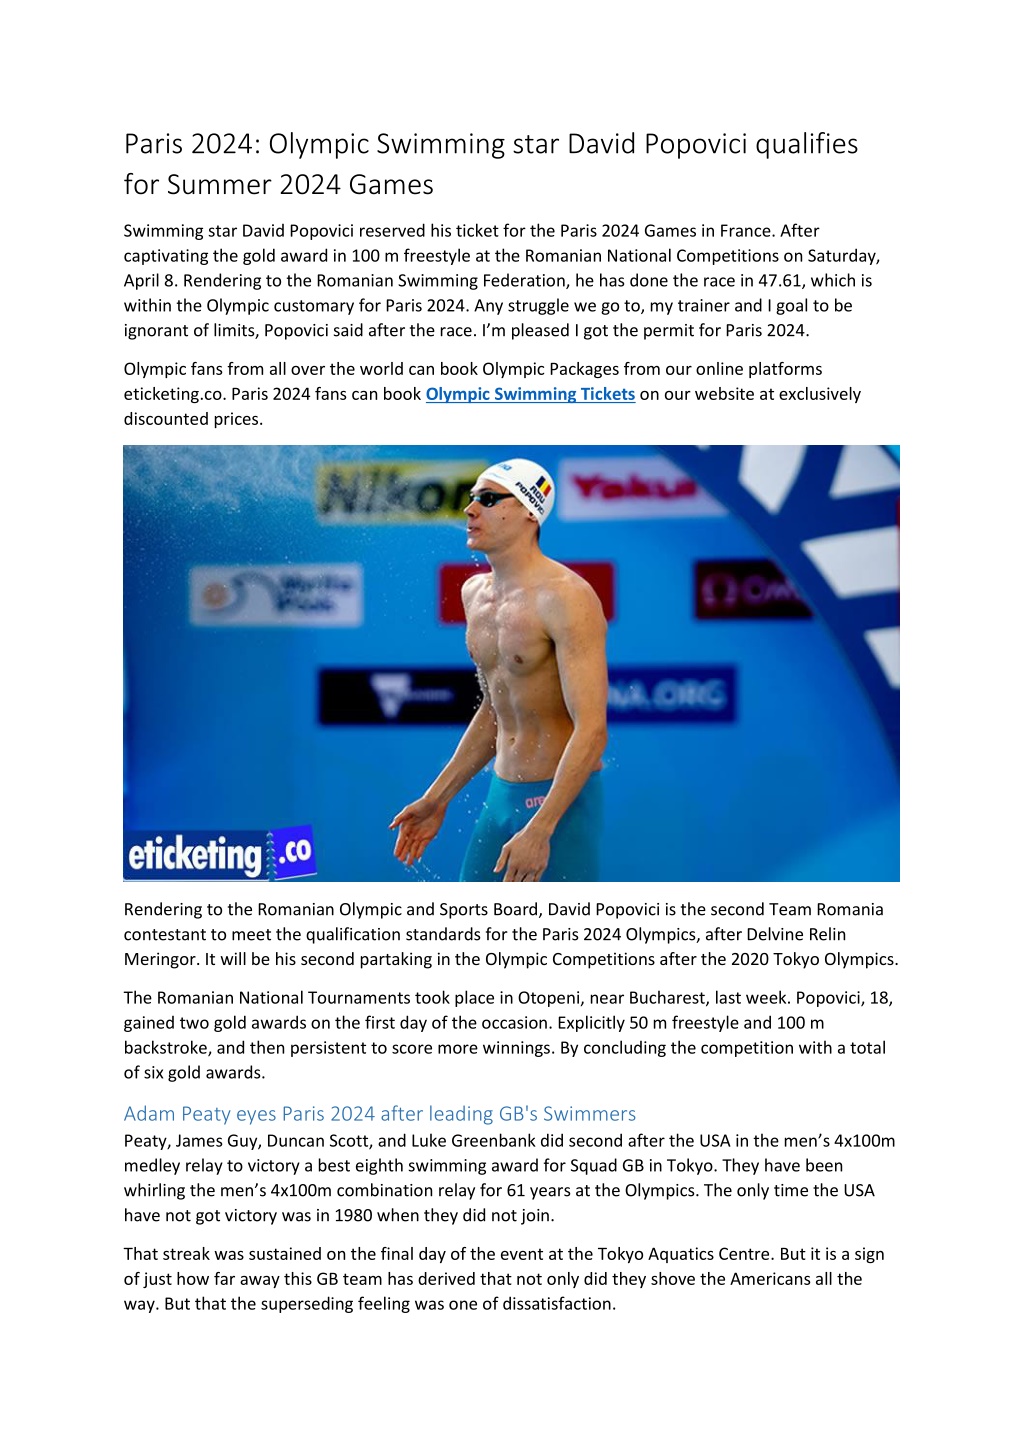 PPT Paris 2024 Olympic Swimming star David Popovici qualifies for